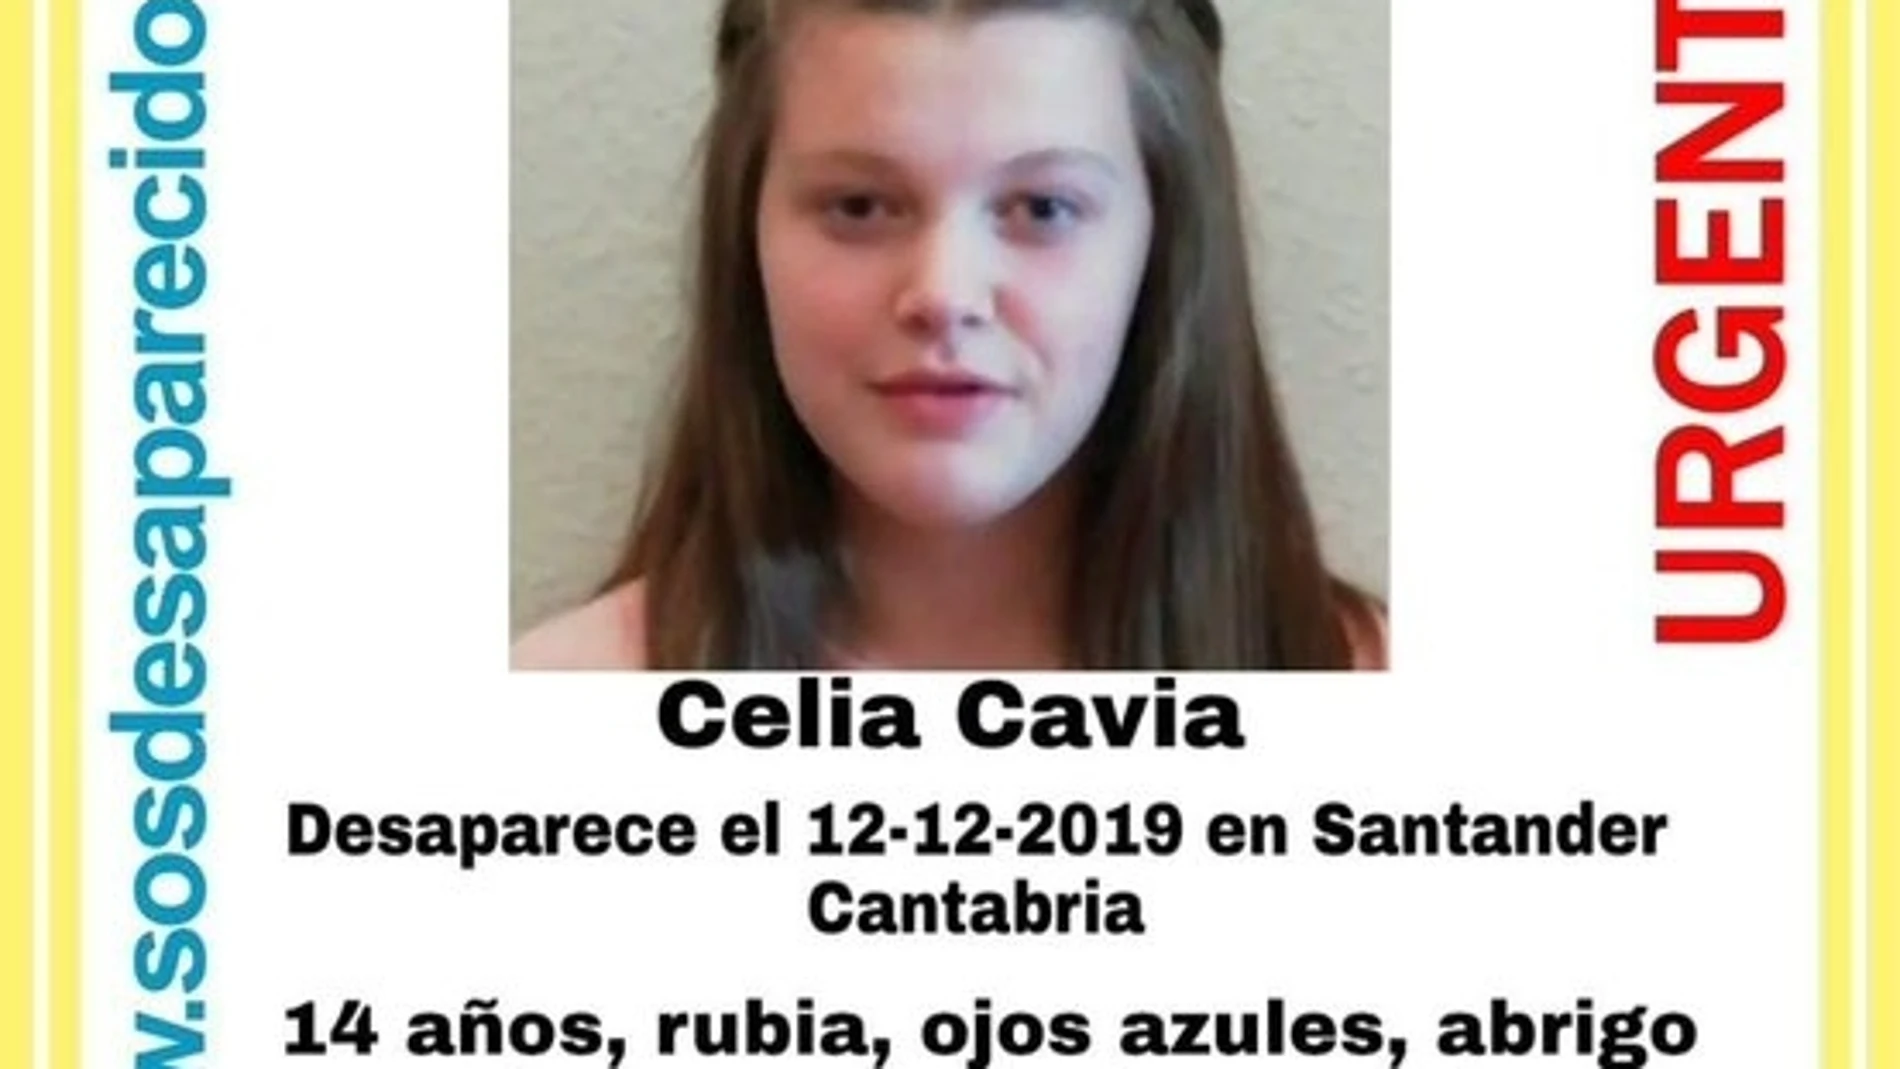 Celia Cavia